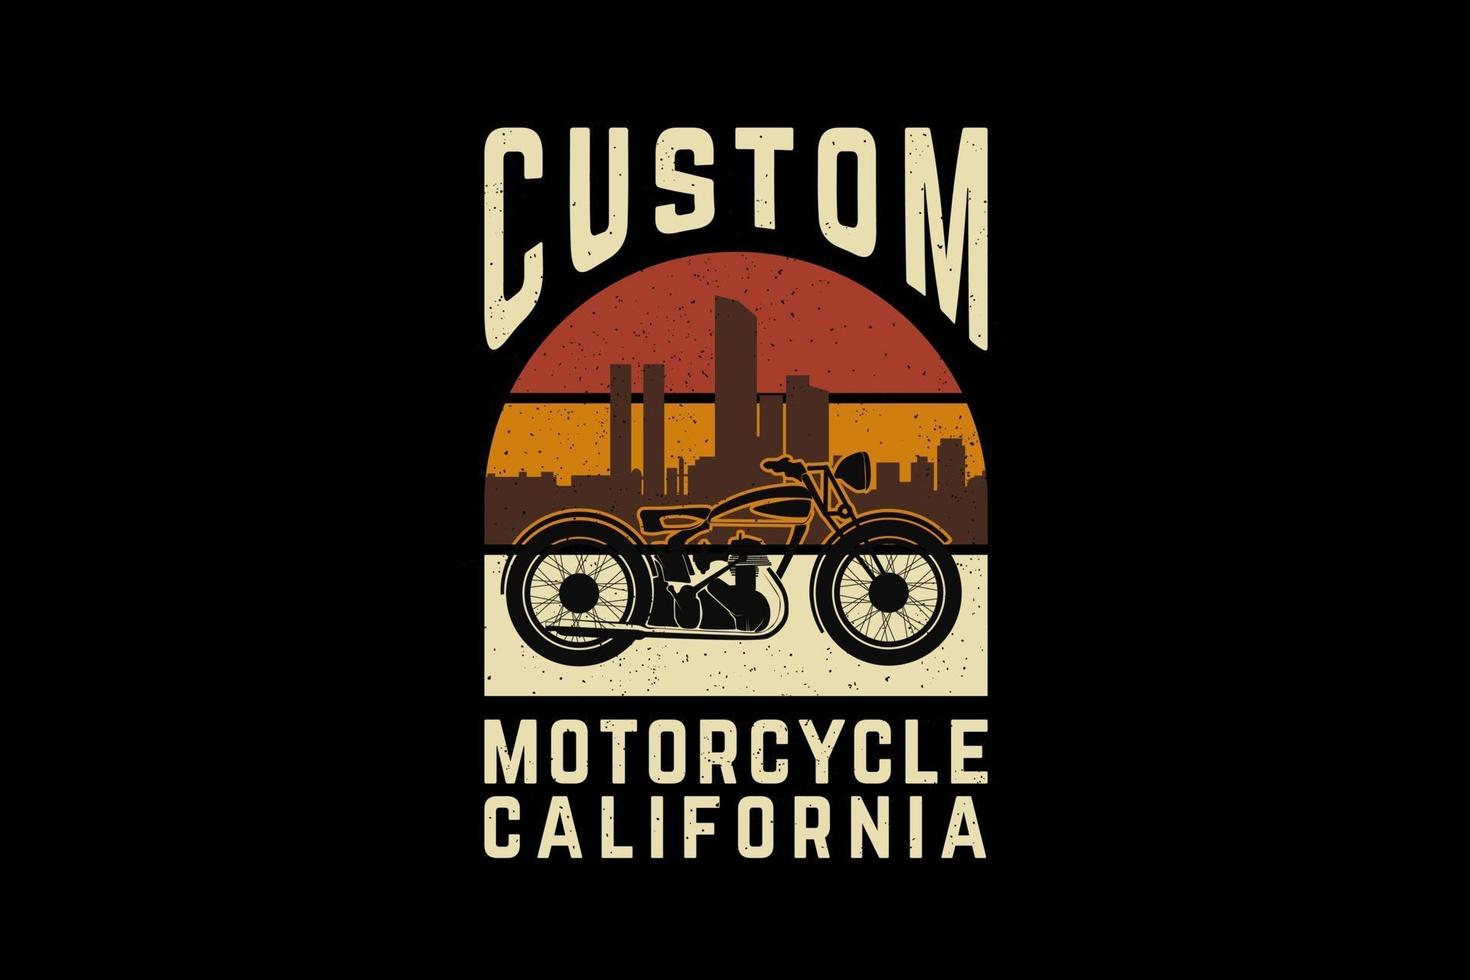 Custom motorcycle california, design silhouette retro style vector